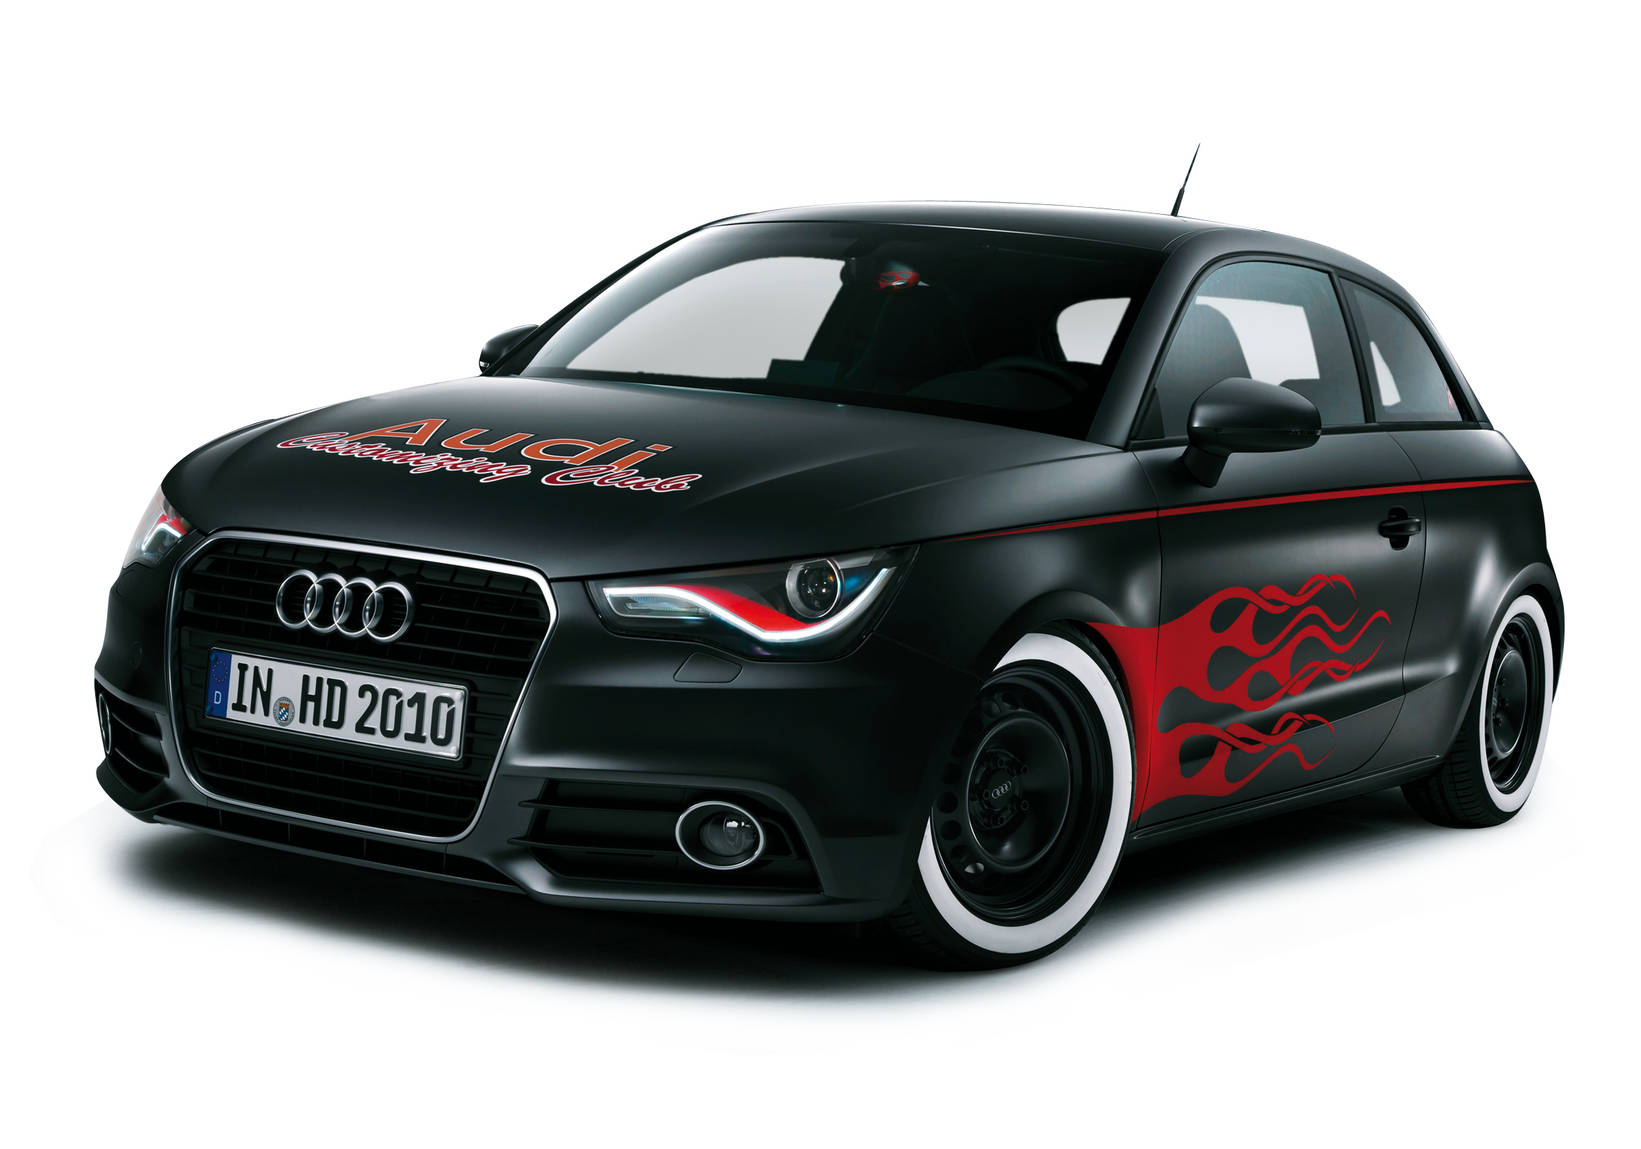 Audi A1 "Hot Rod"